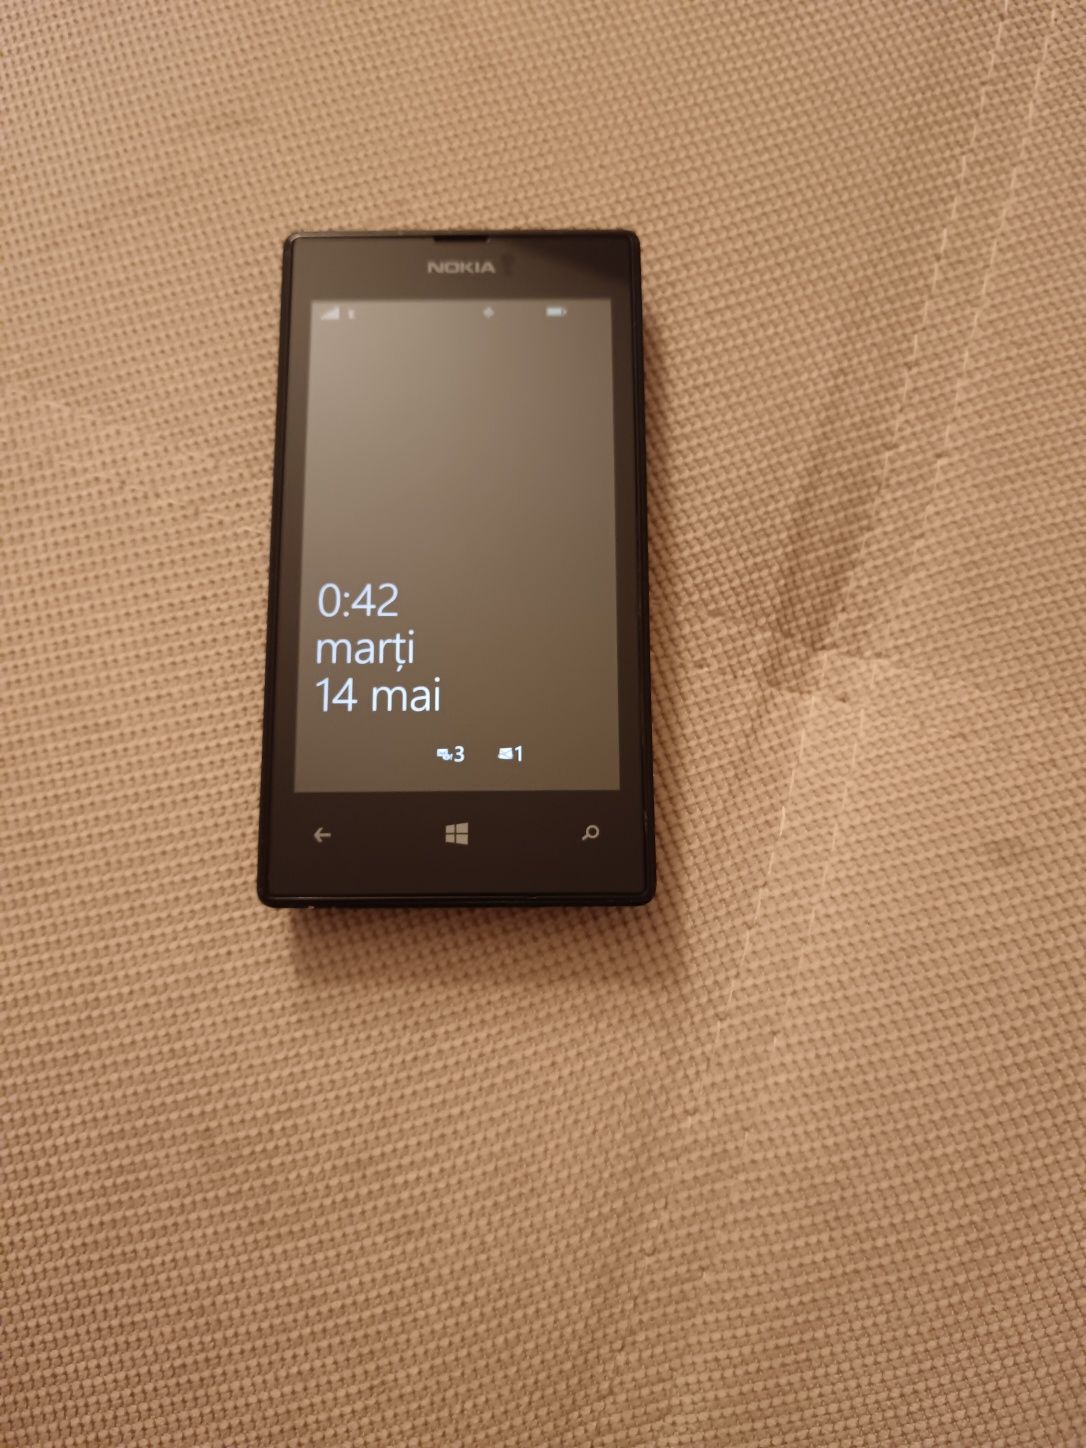 Nokia 520 ca nou decodat, meniu română